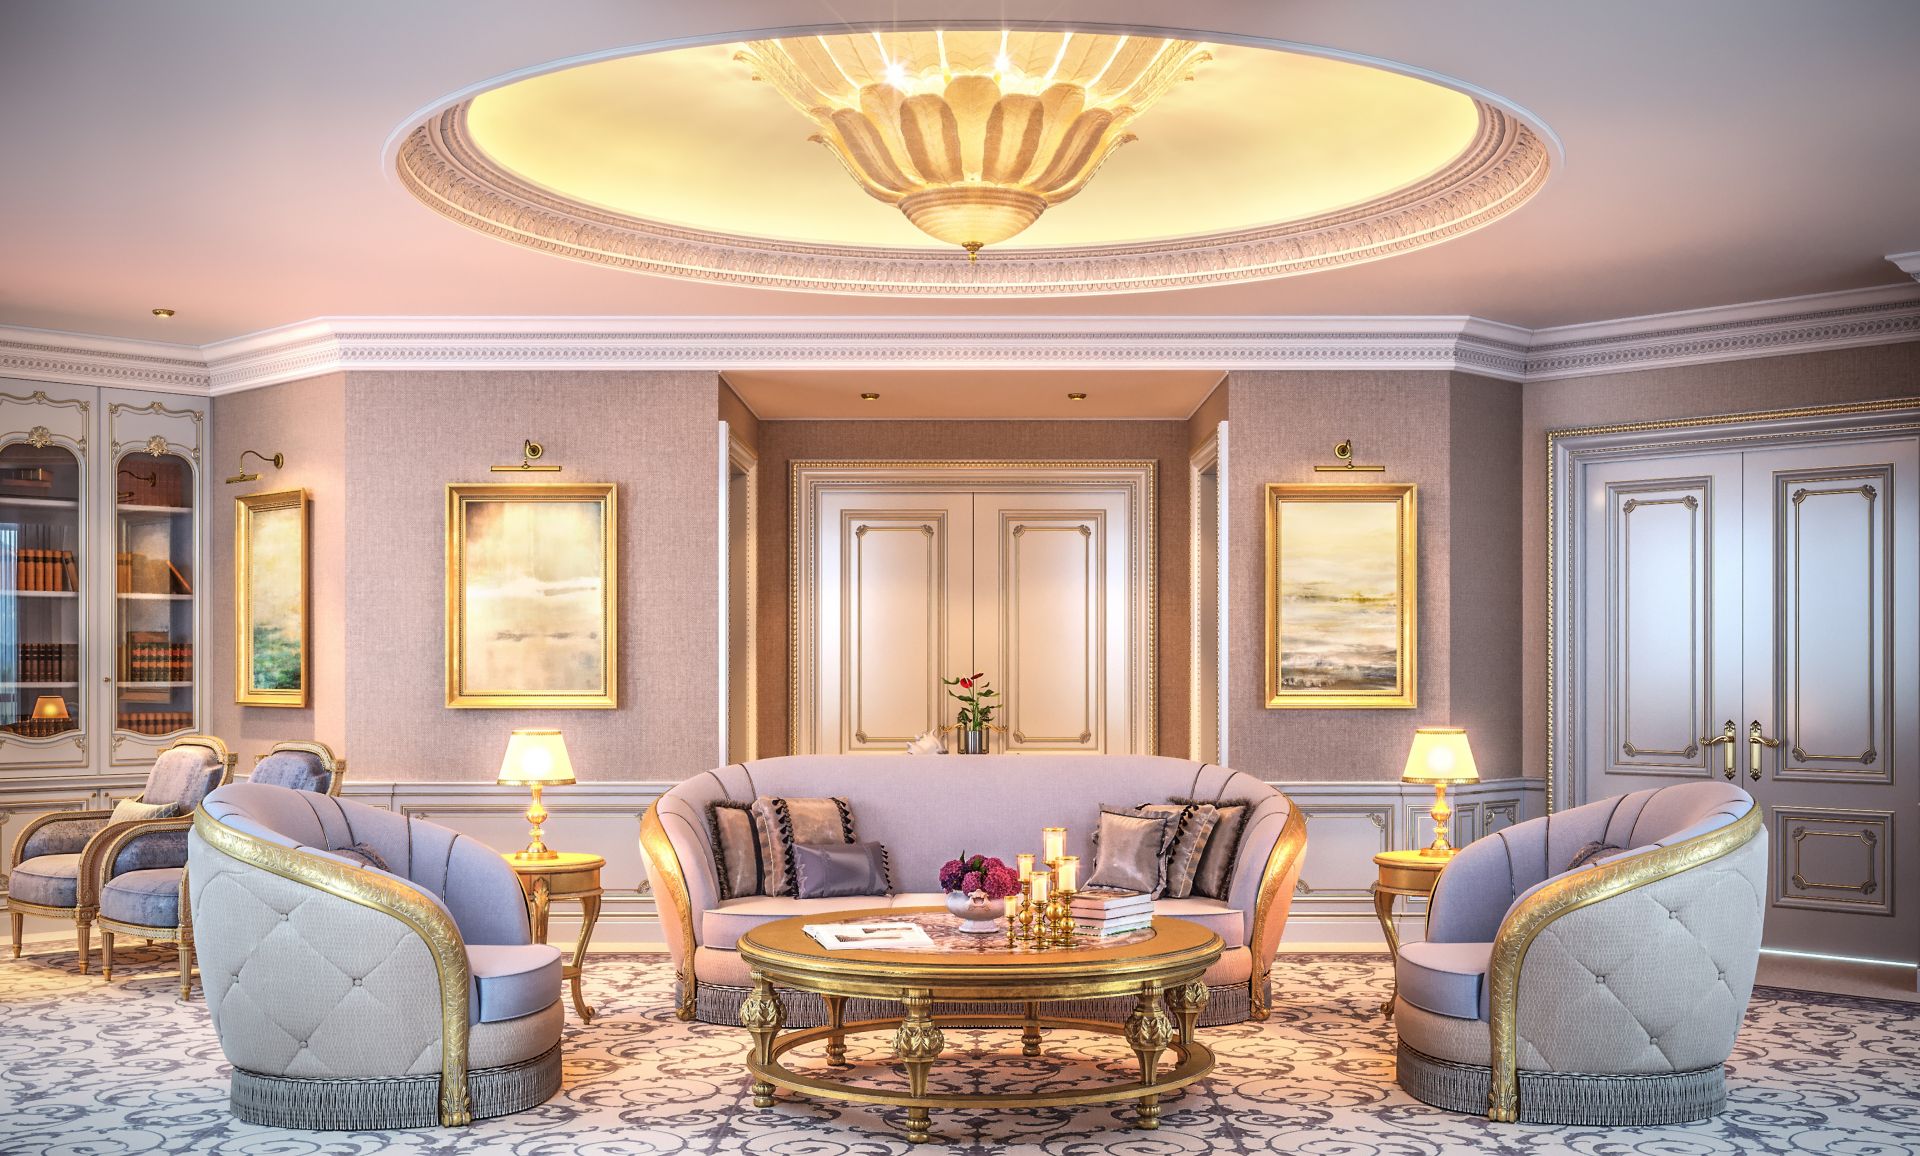 Design, Presidential suite interior in the Hilton hotel, Uzbekistan